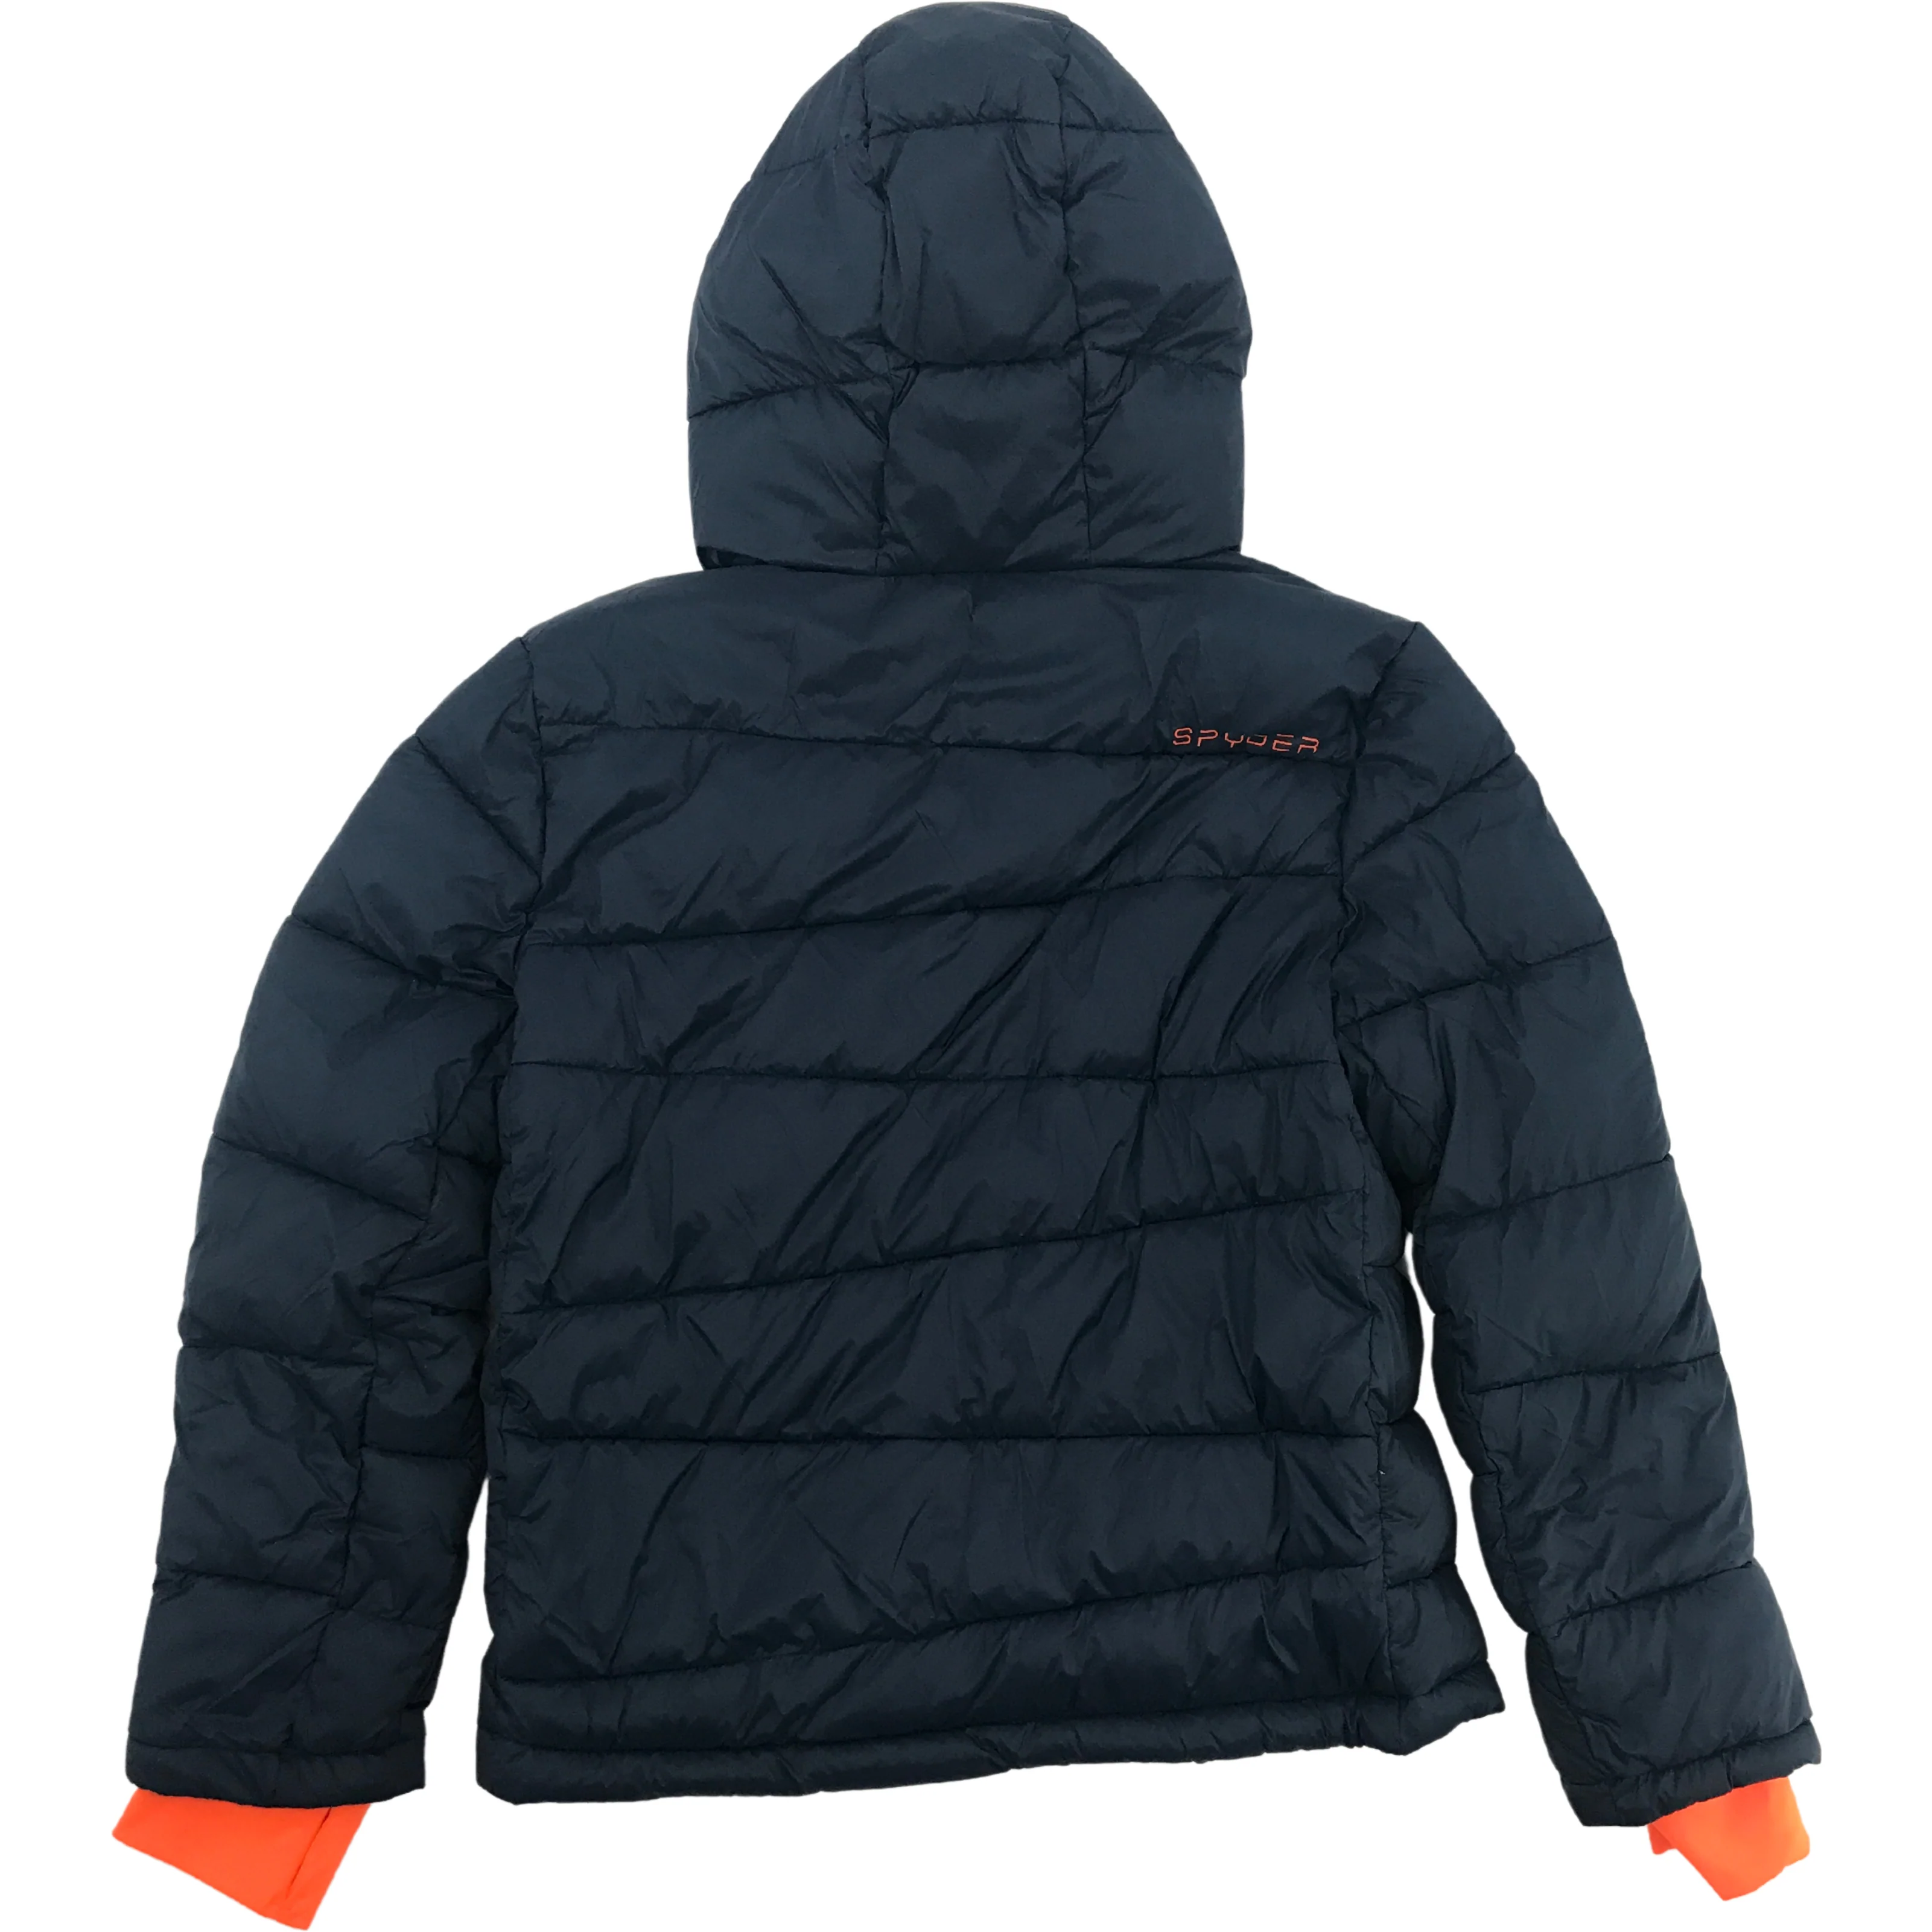 Spyder Boy's Winter Jacket / Winter Coat / Size Medium / Blue & Orange